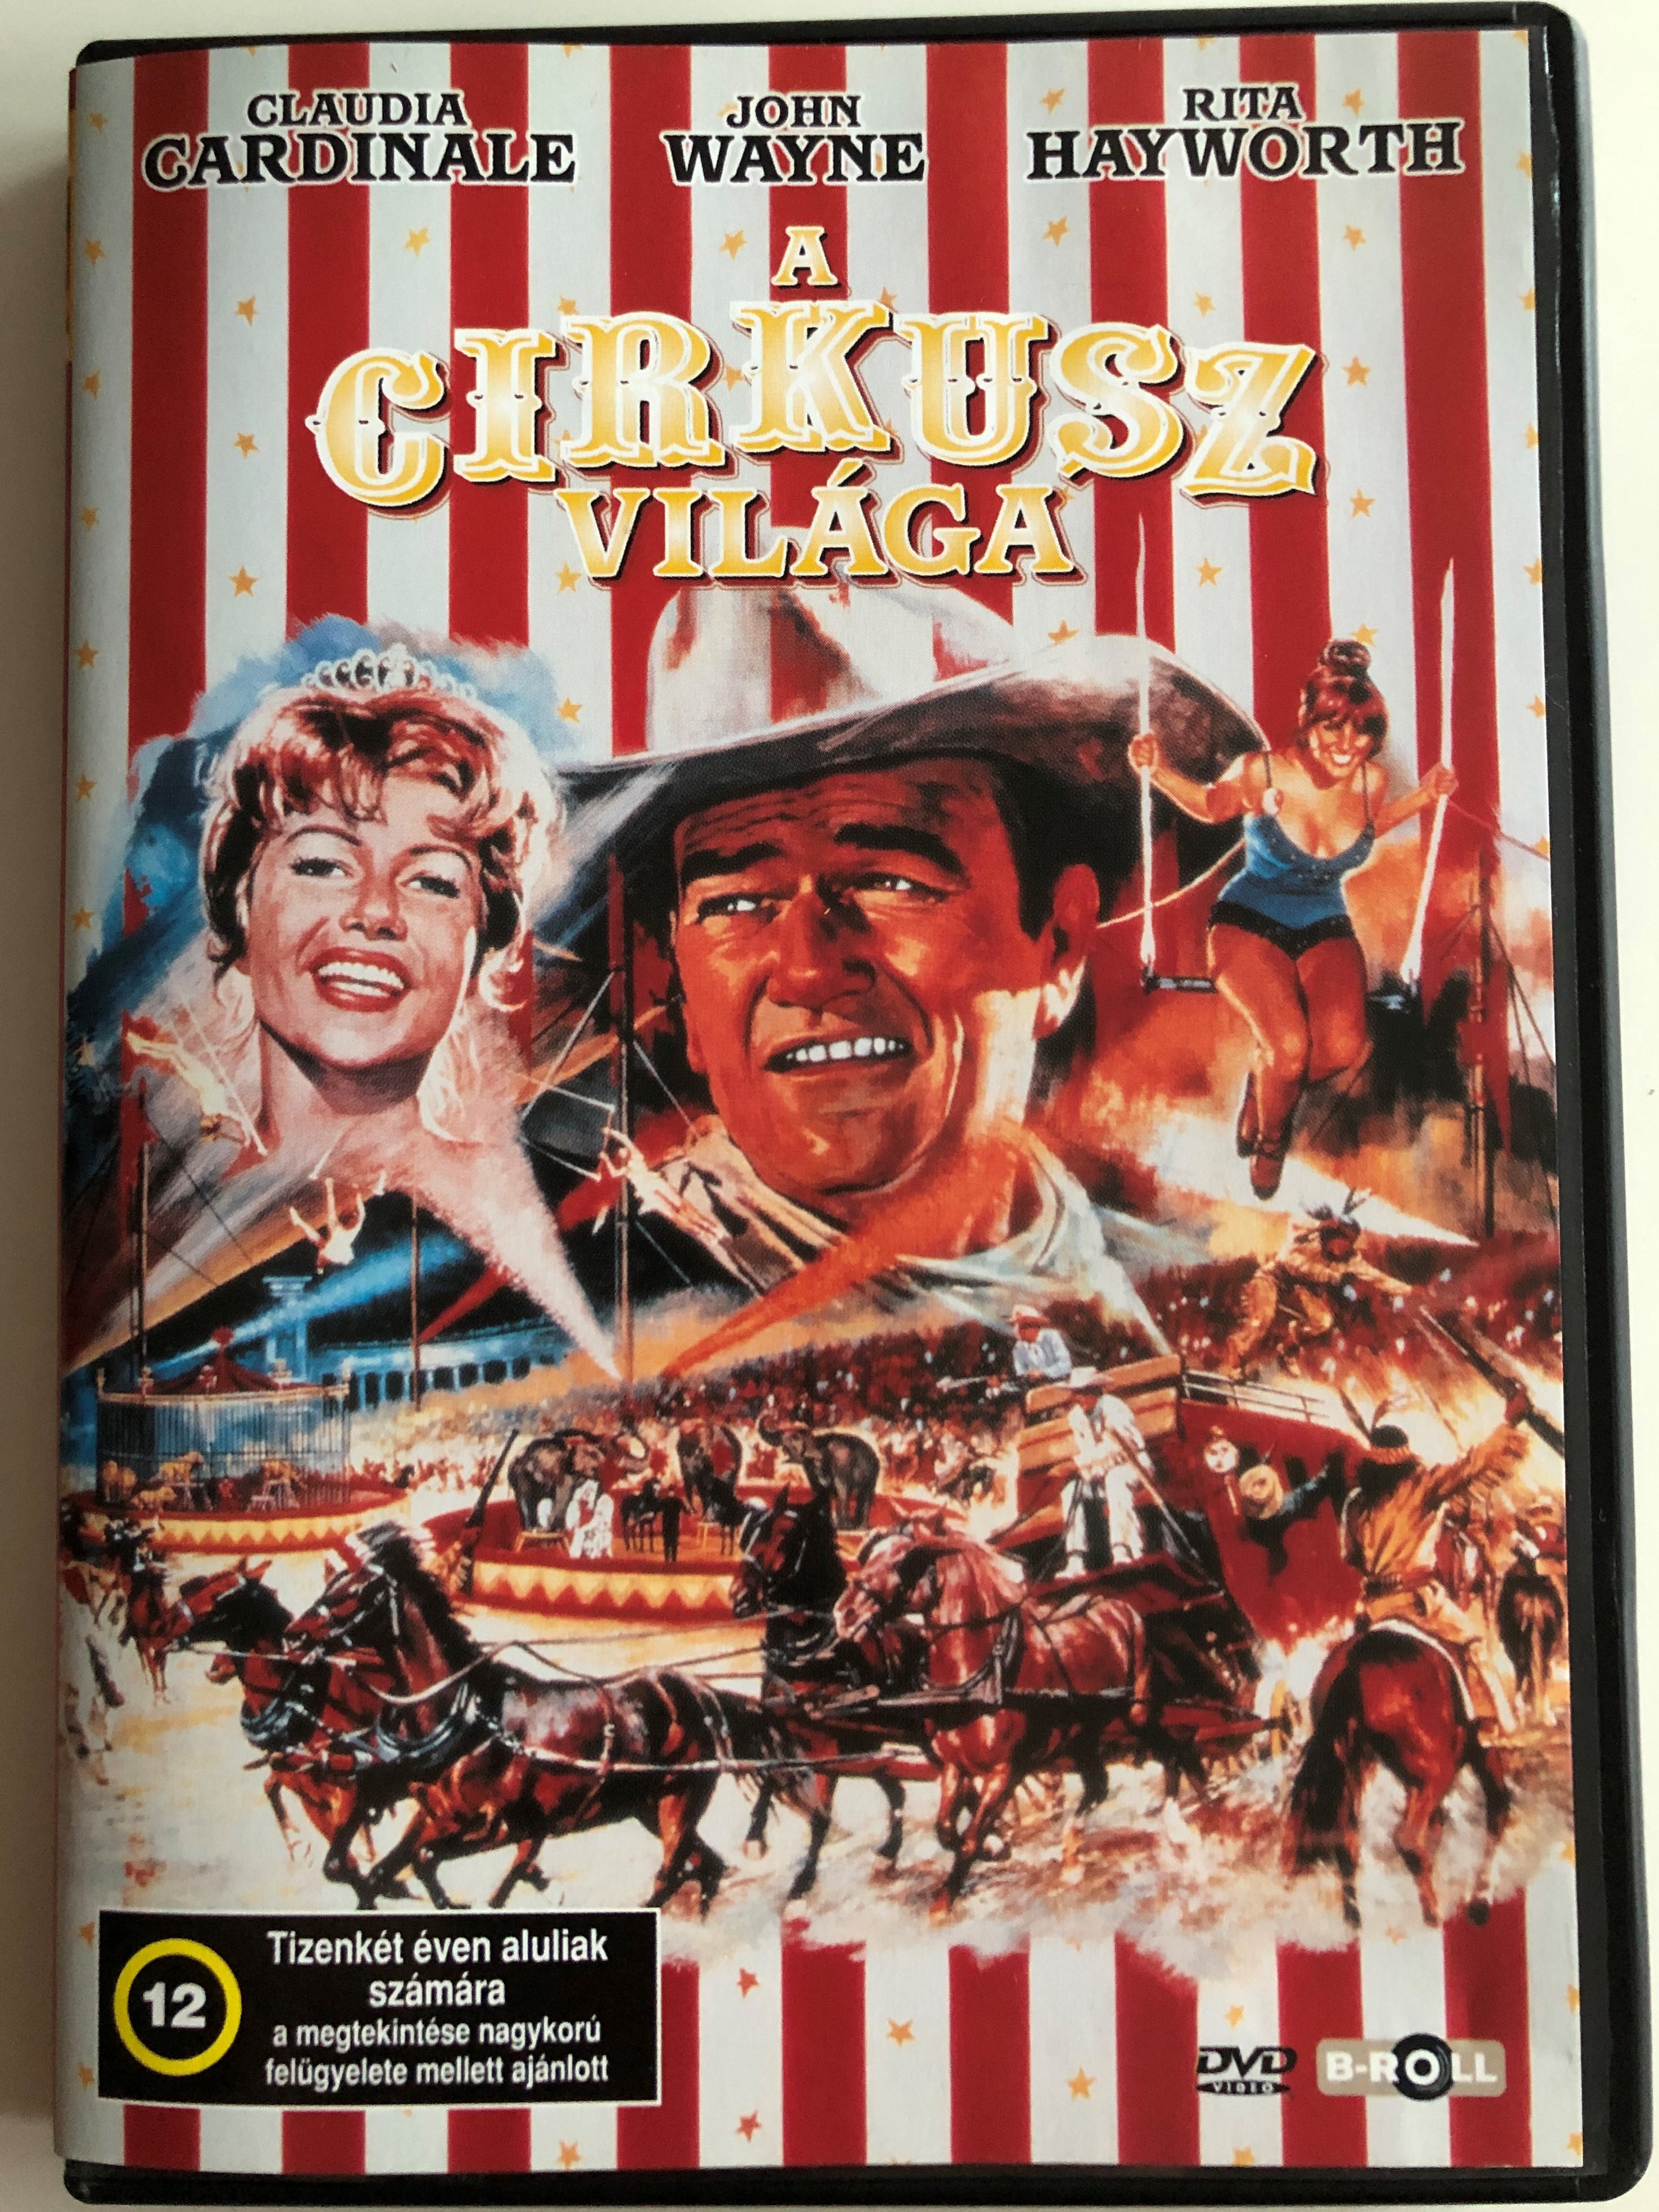 circus-world-dvd-1964-a-cirkusz-vil-ga-directed-by-henry-hathaway-1.jpg